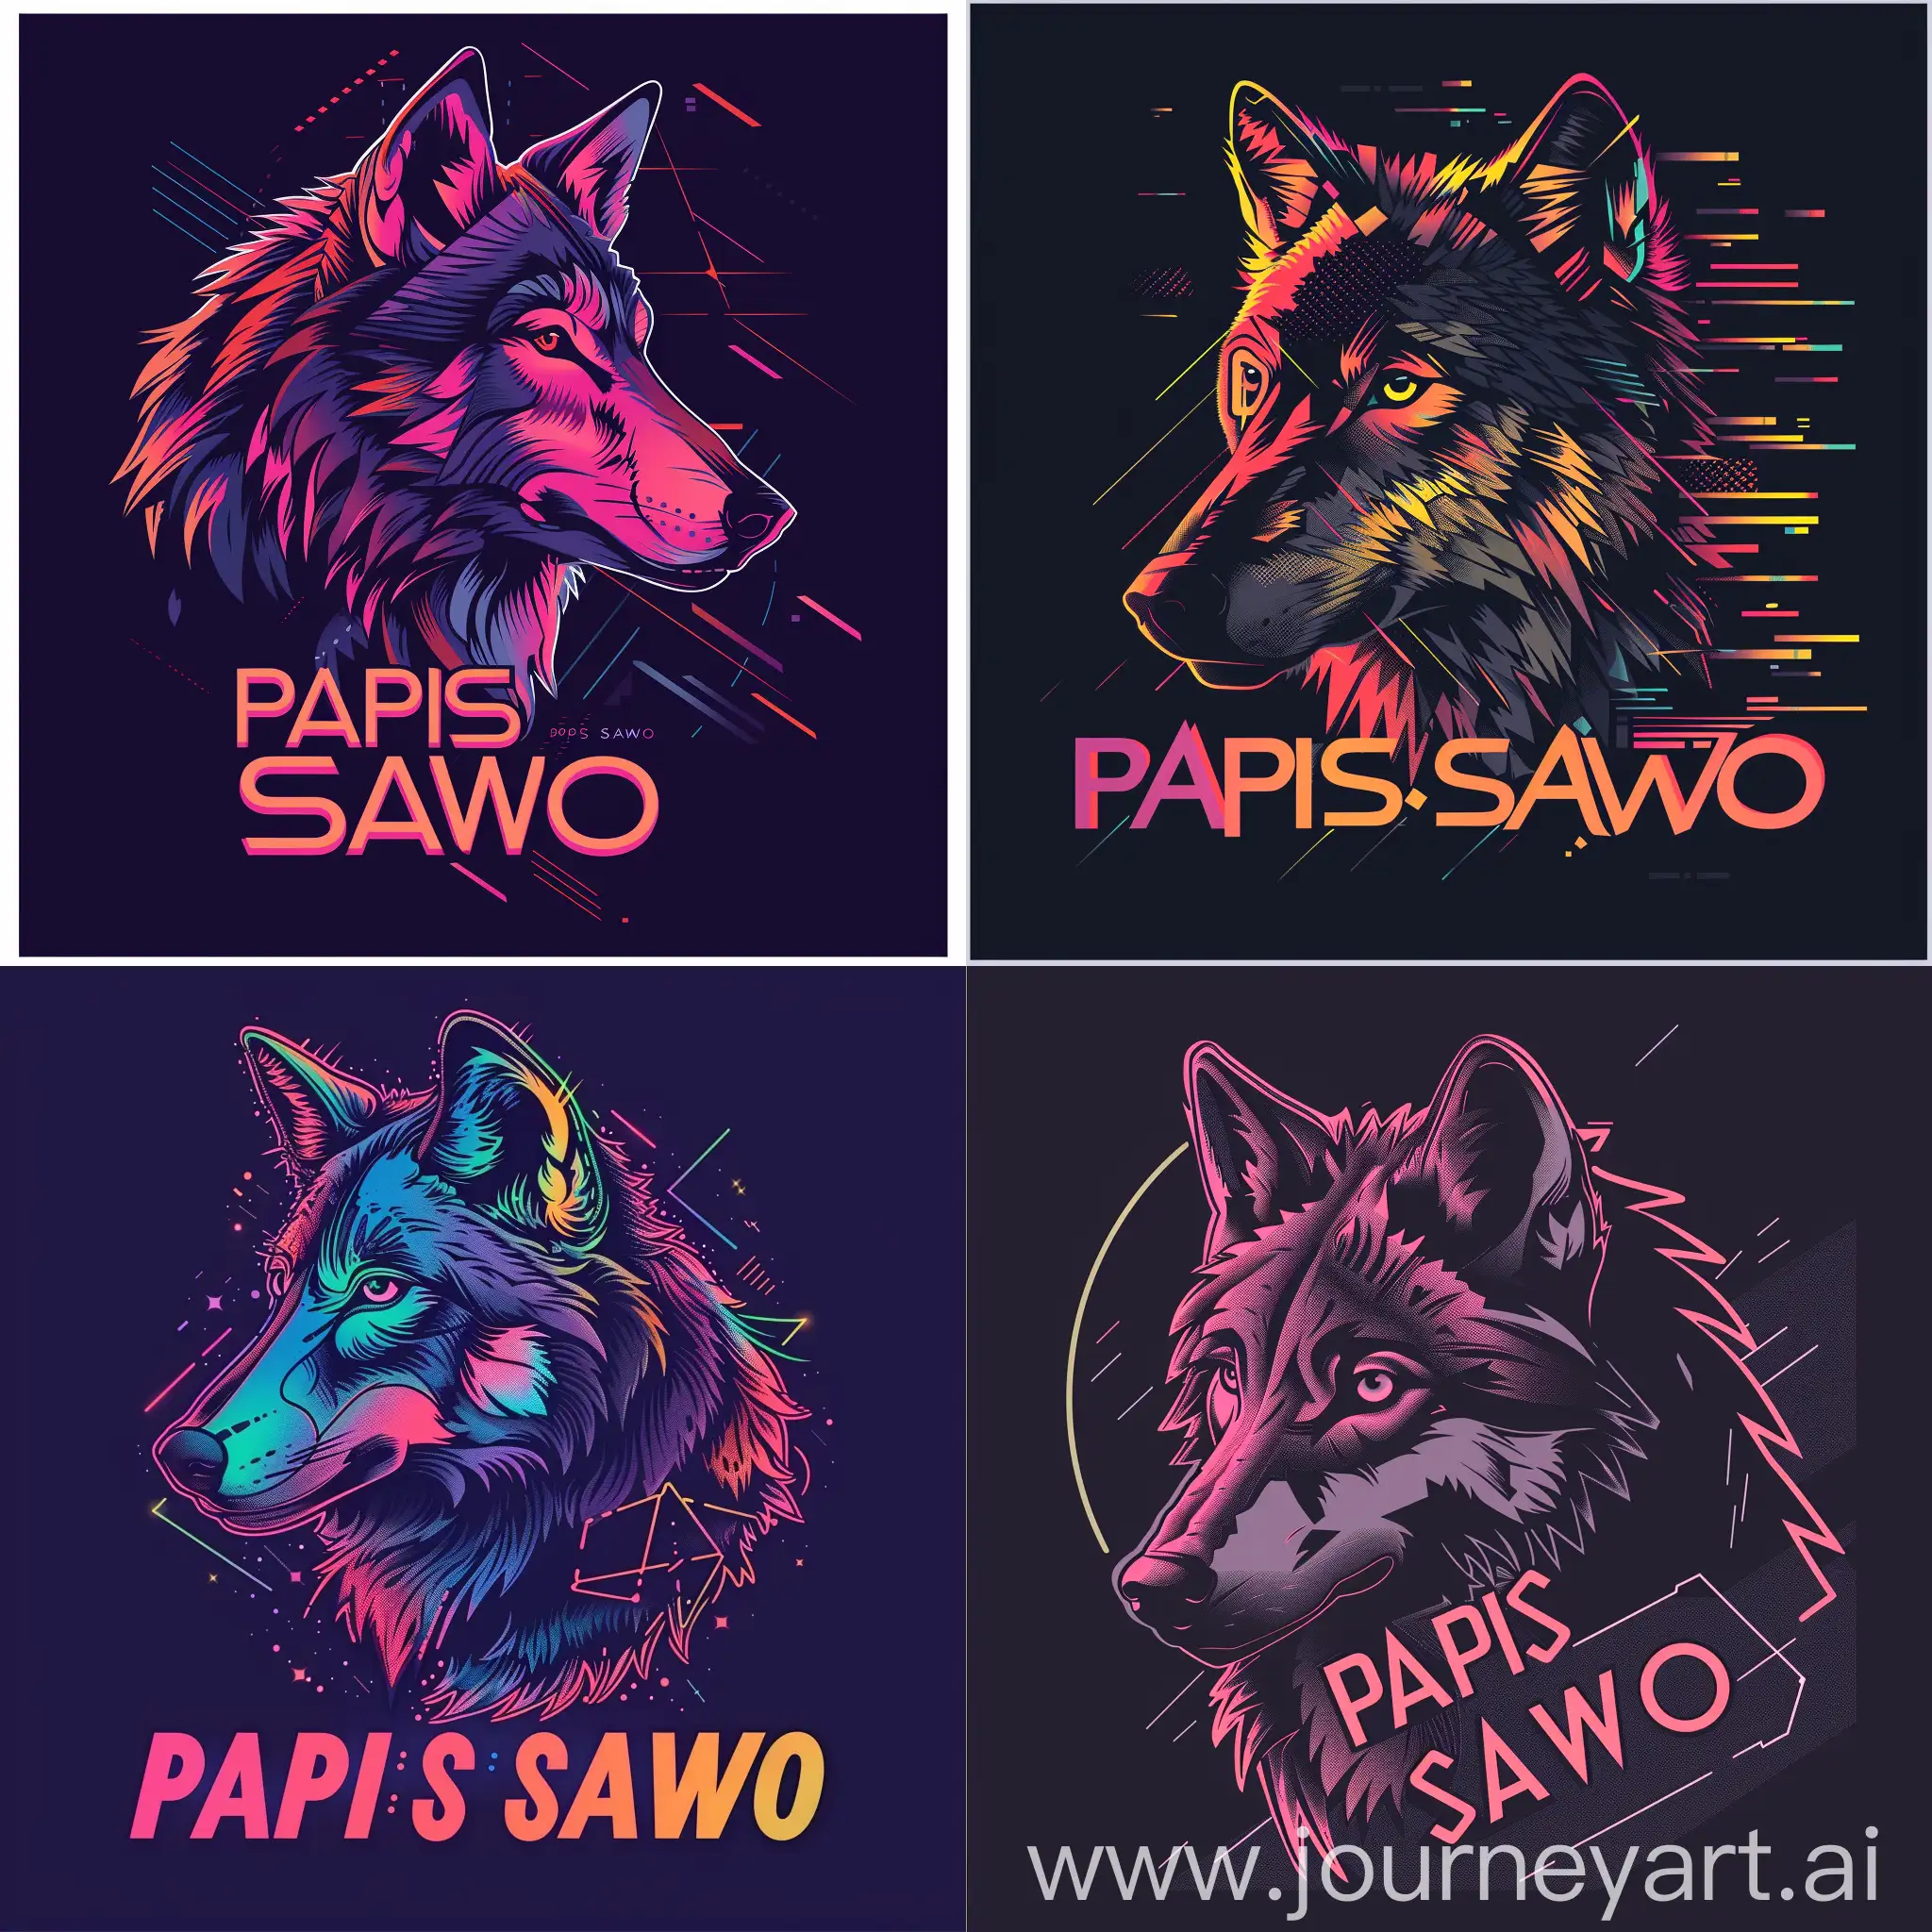 TechnoStyle-Stylized-Wolf-Logo-PAPIS-SAWO-with-Neon-Accents